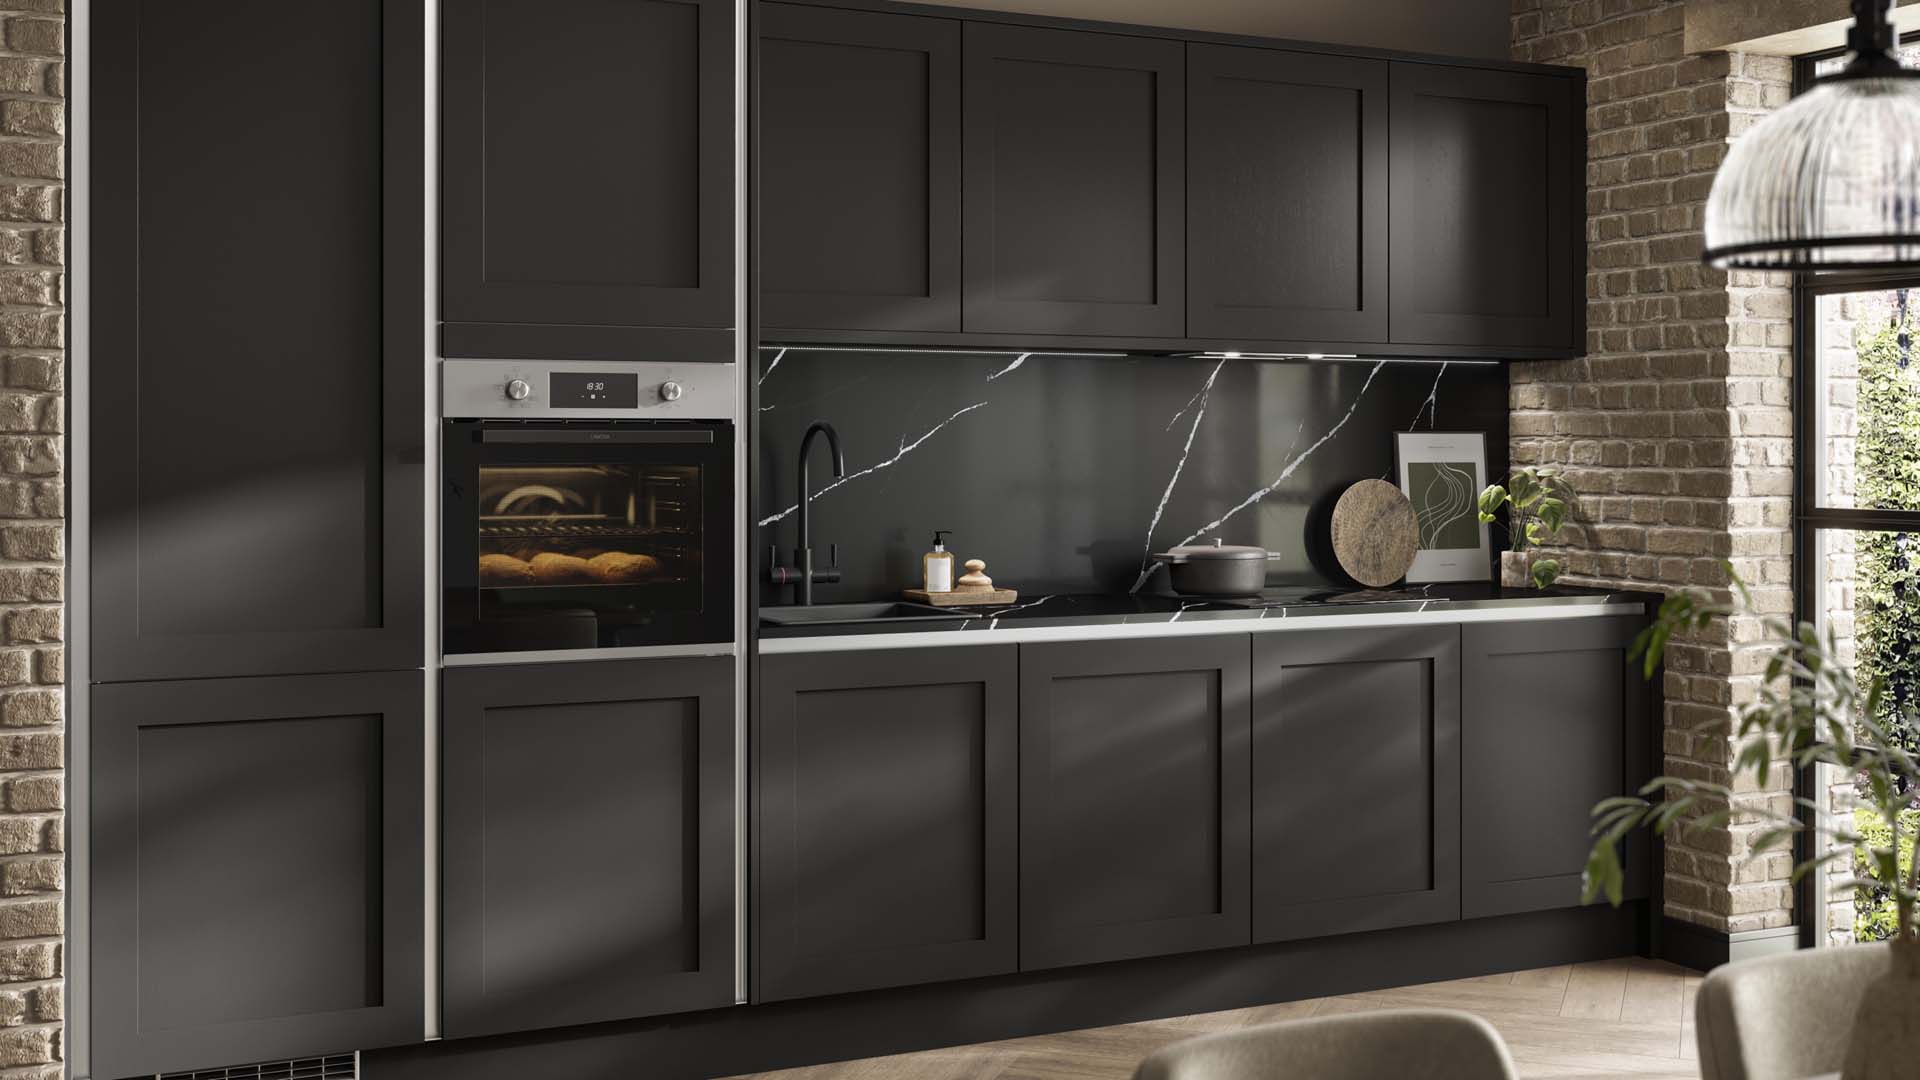 Dark coloured kitchen units